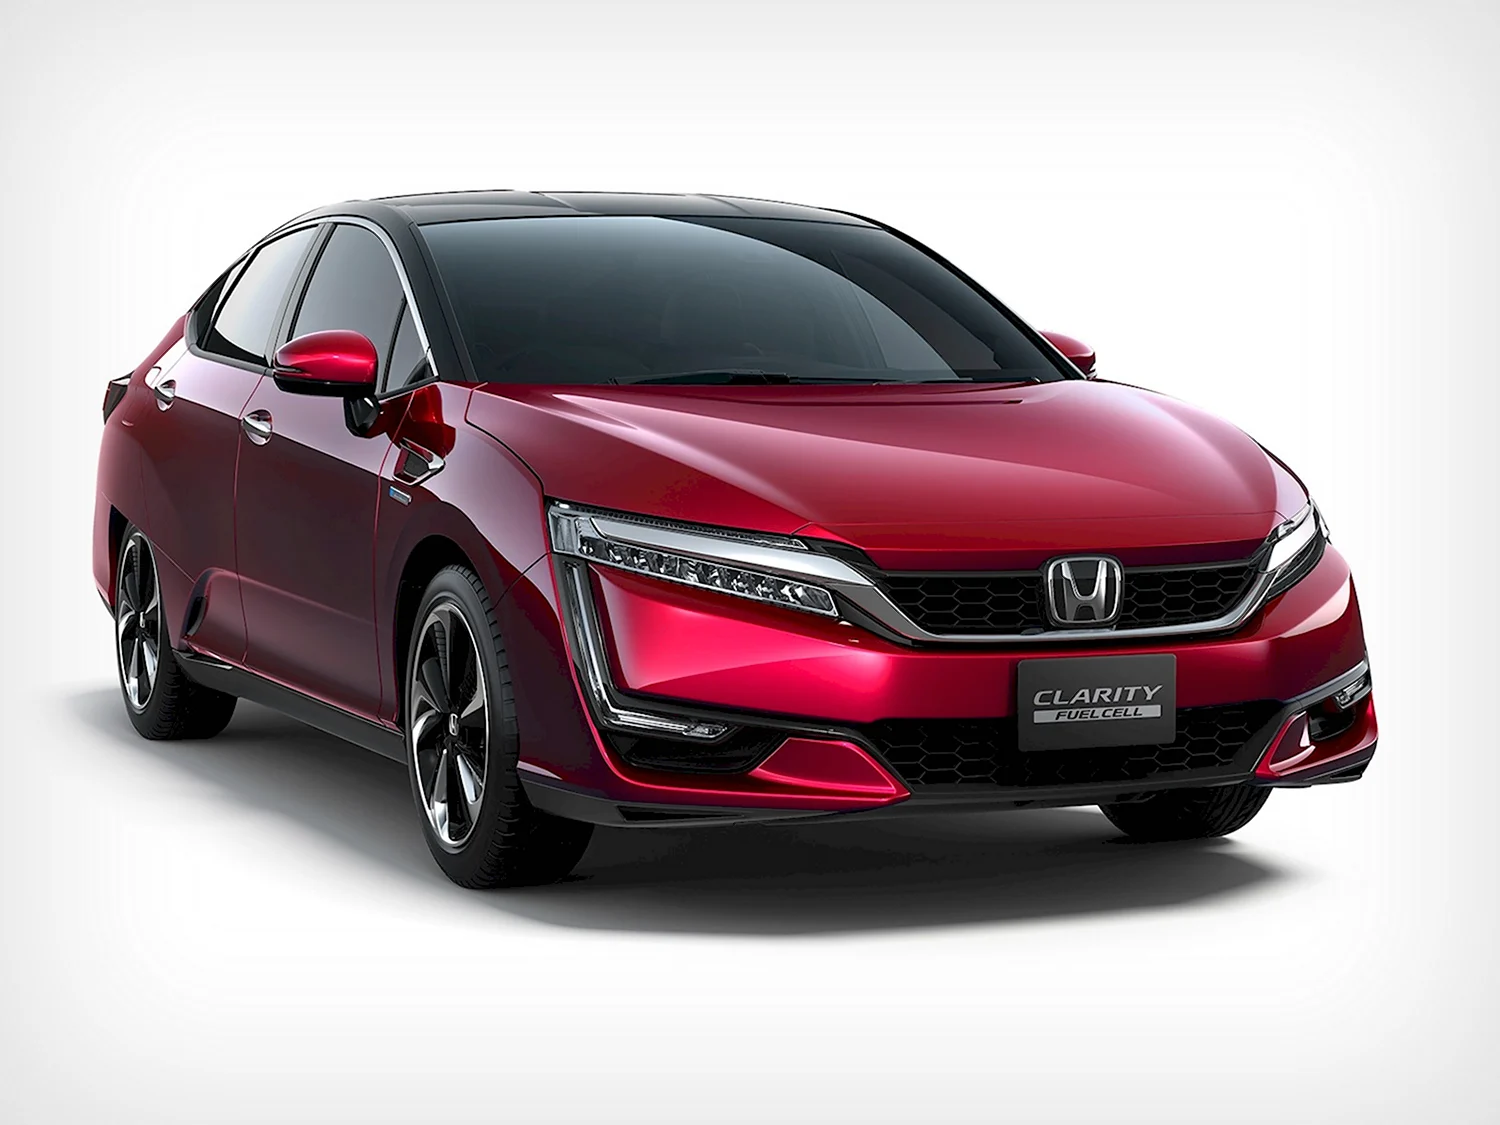 Honda Clarity fuel Cell